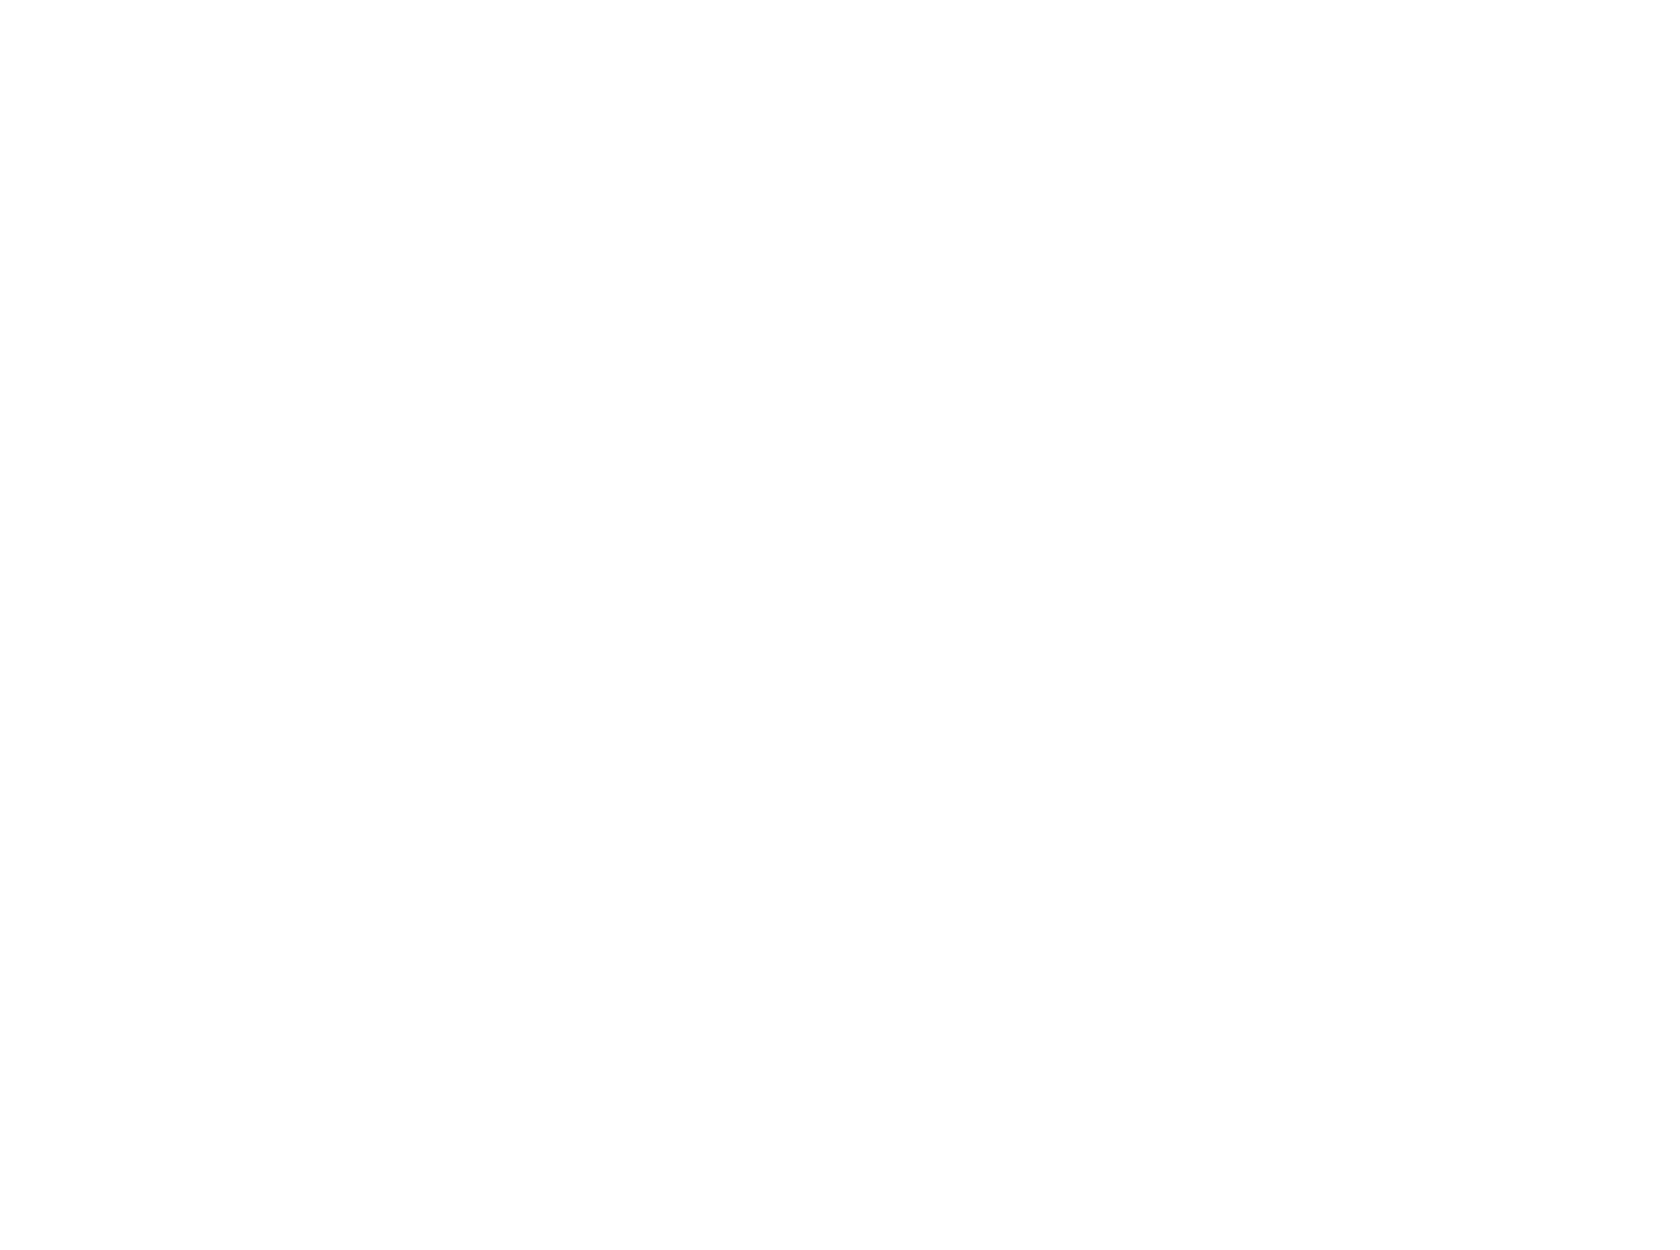 иллюстрация узрютова детская иллюстрация астрид линдгрен каллюе блюмквист